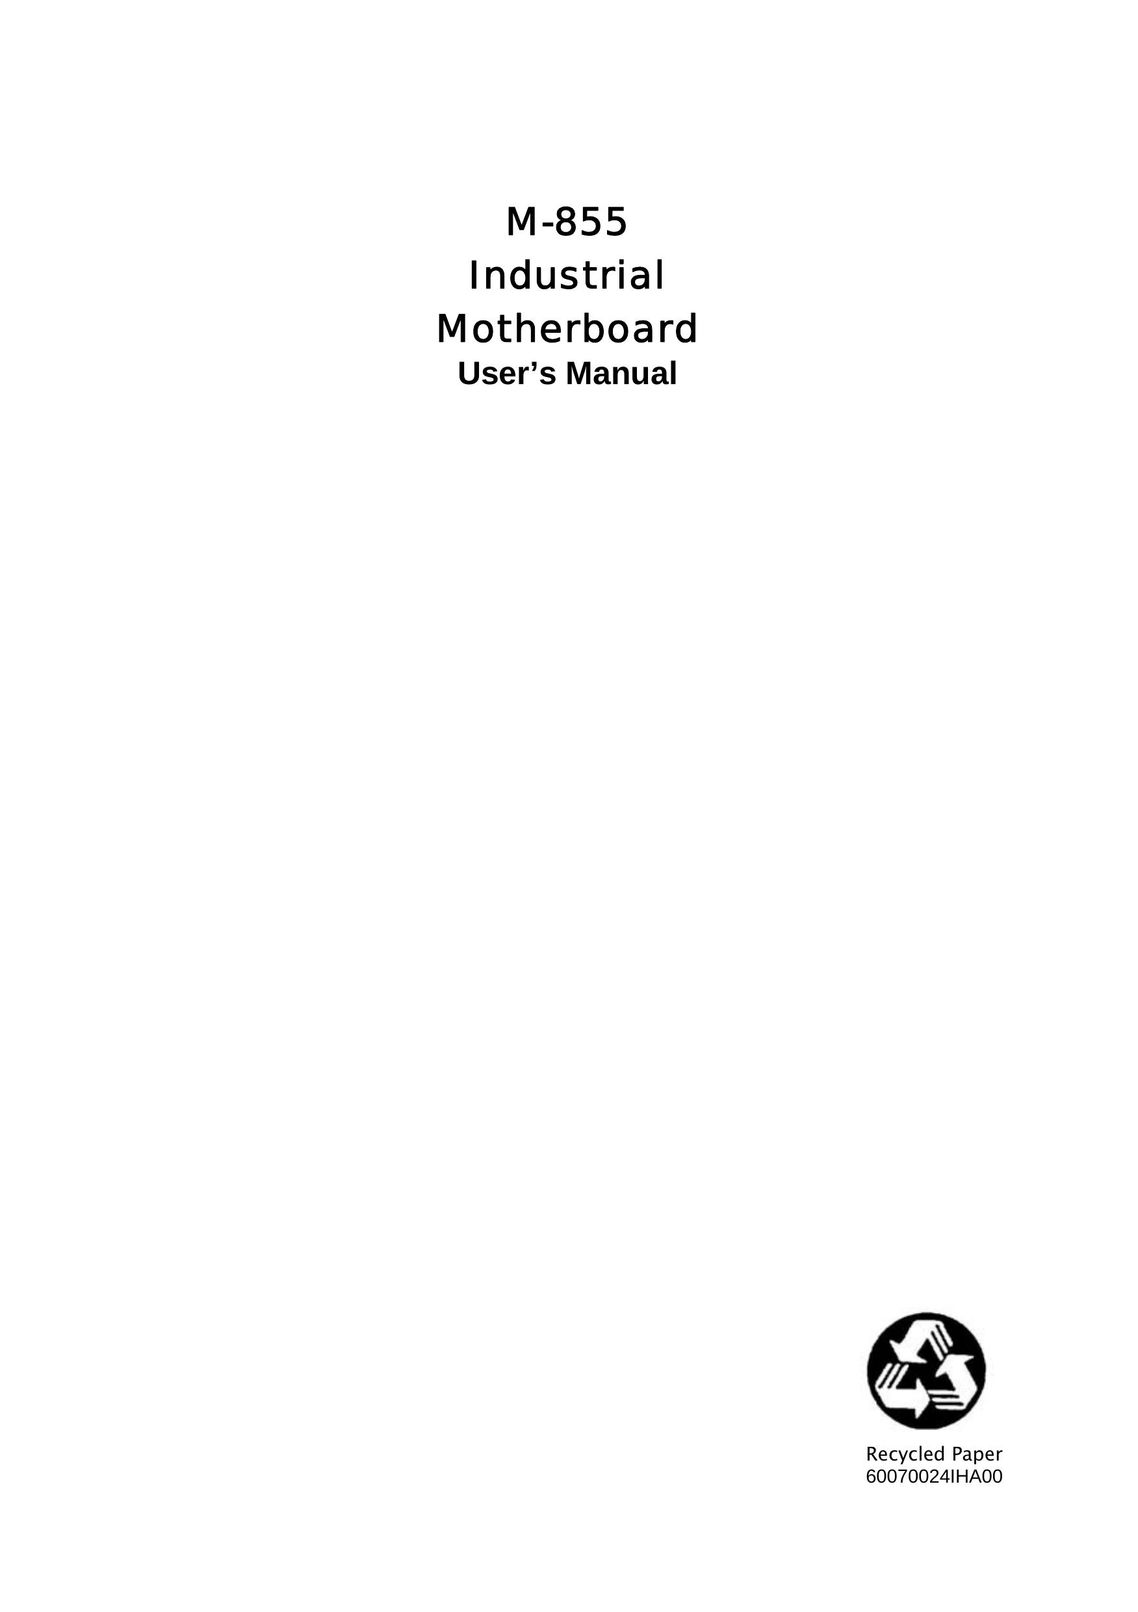 Universal Remote Control M-855 Computer Hardware User Manual